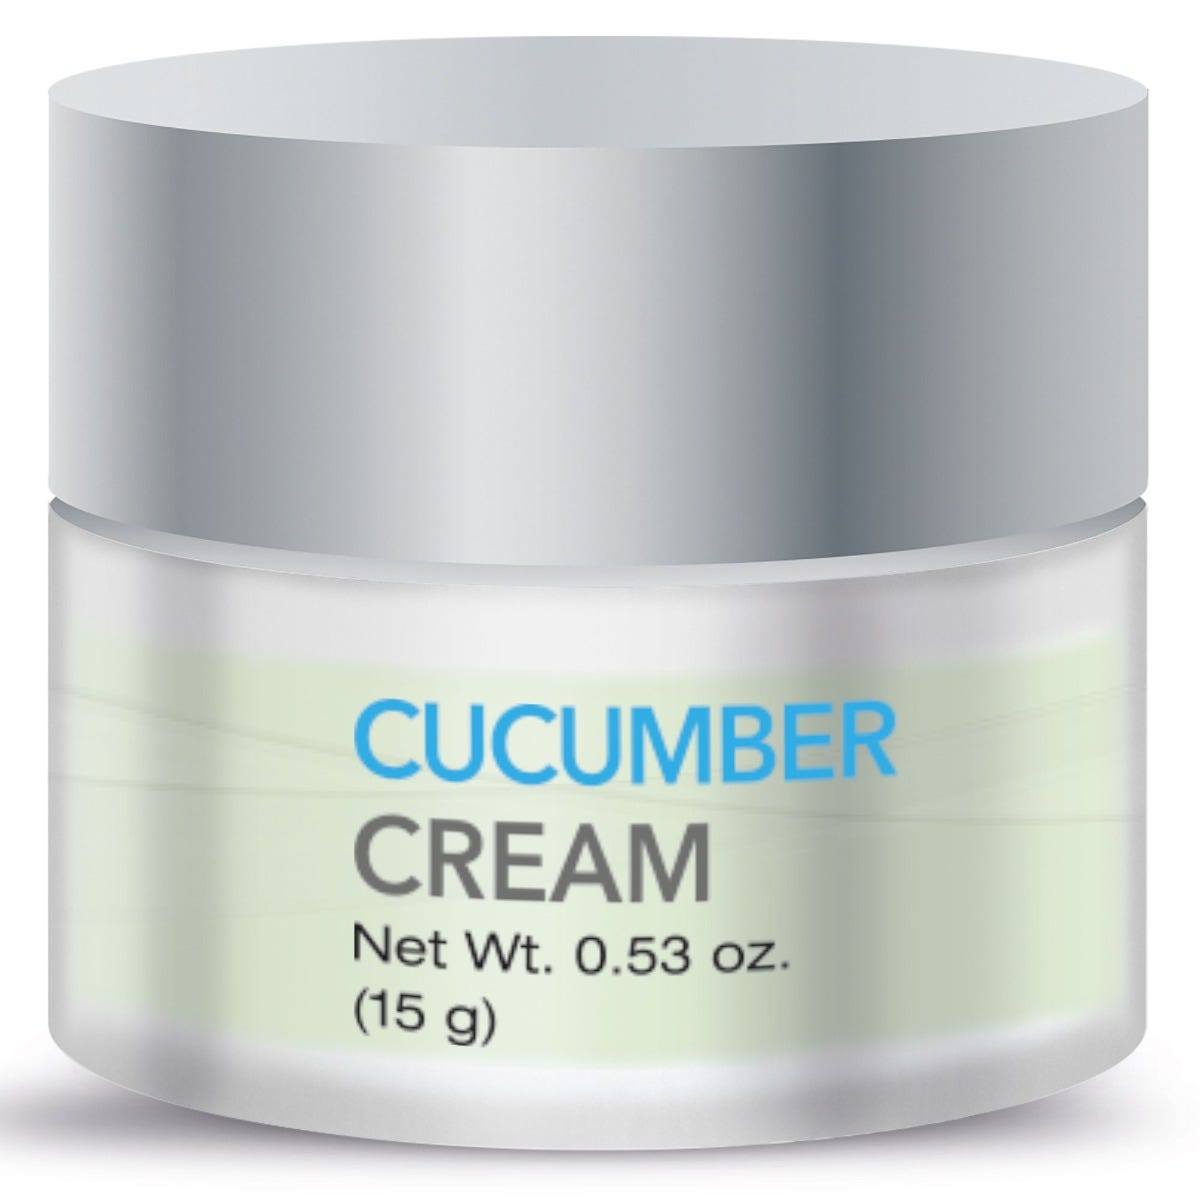 eblume® Anti-aging Cucumber Eye Cream Non-GMO - 0.53 fl oz view 1 of 2